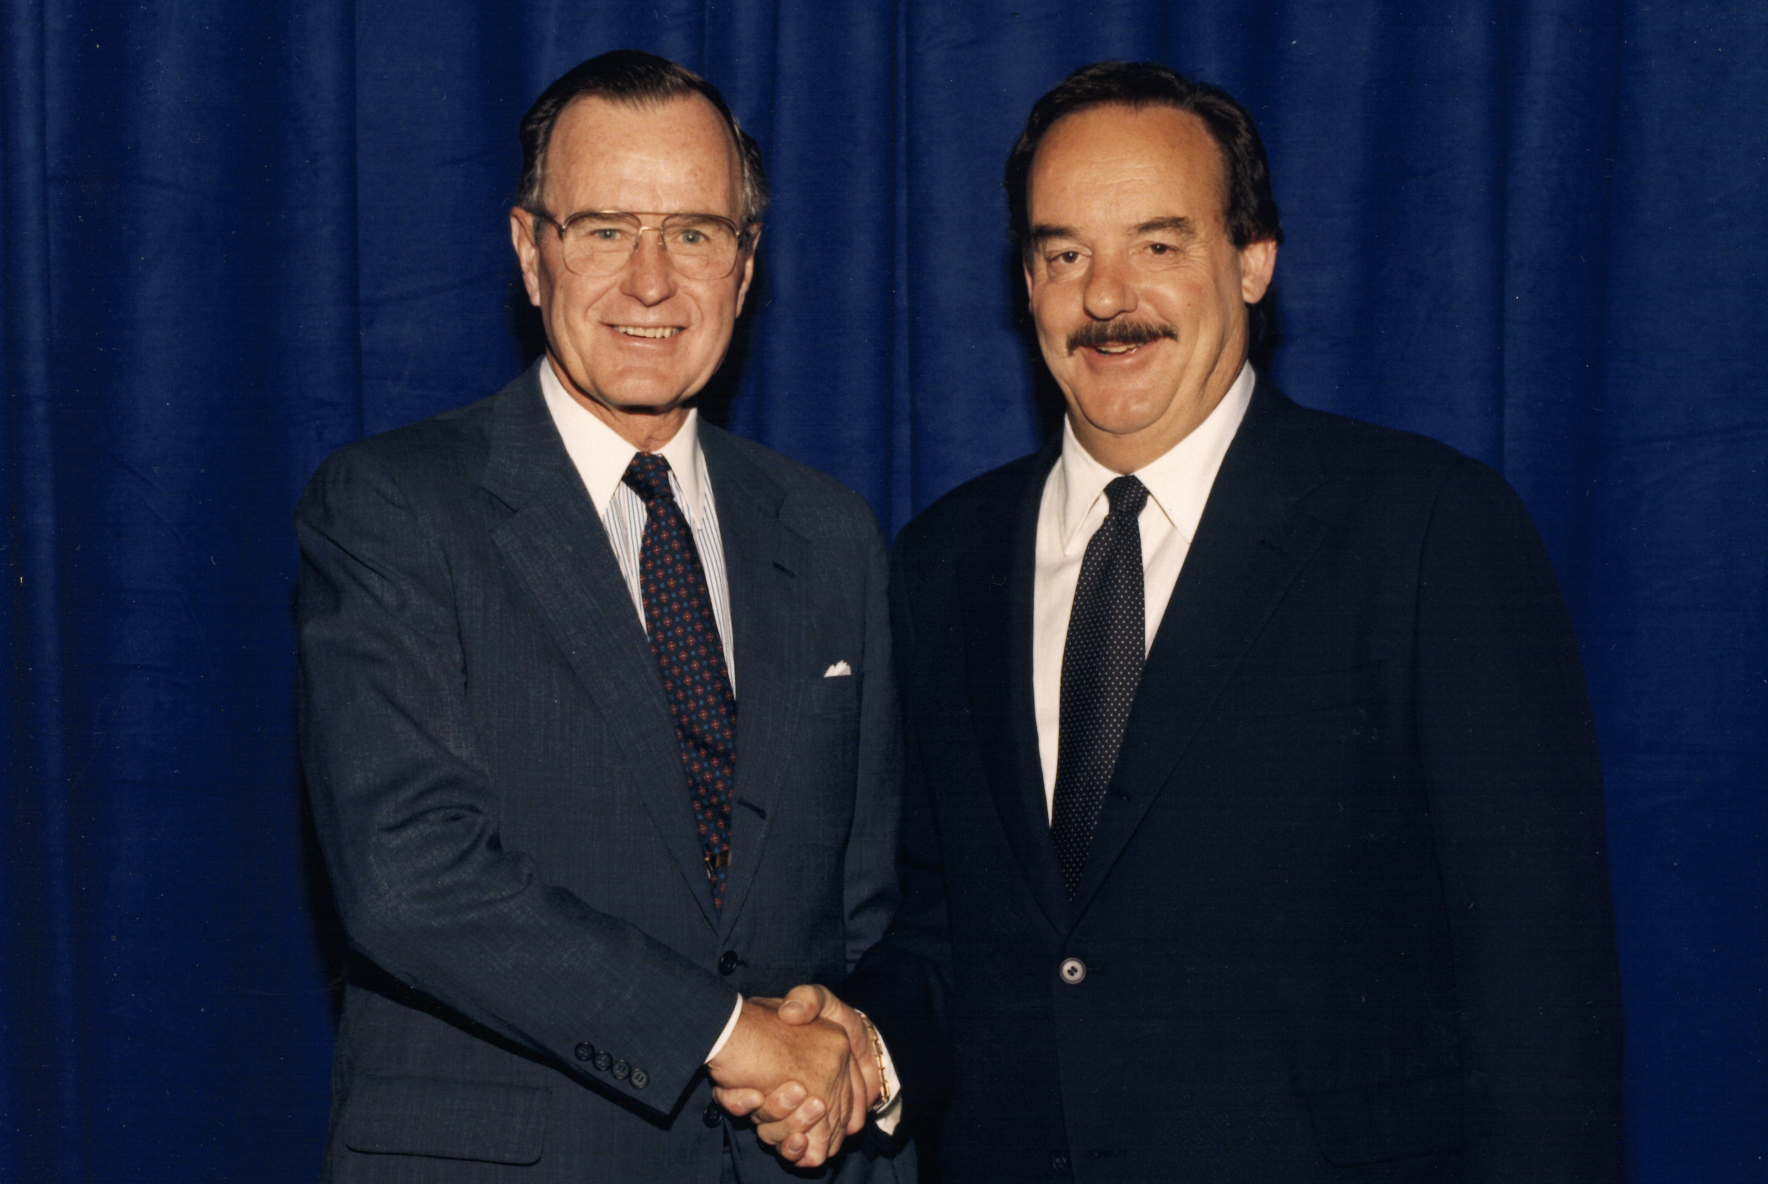 George H.W. Bush and Tony